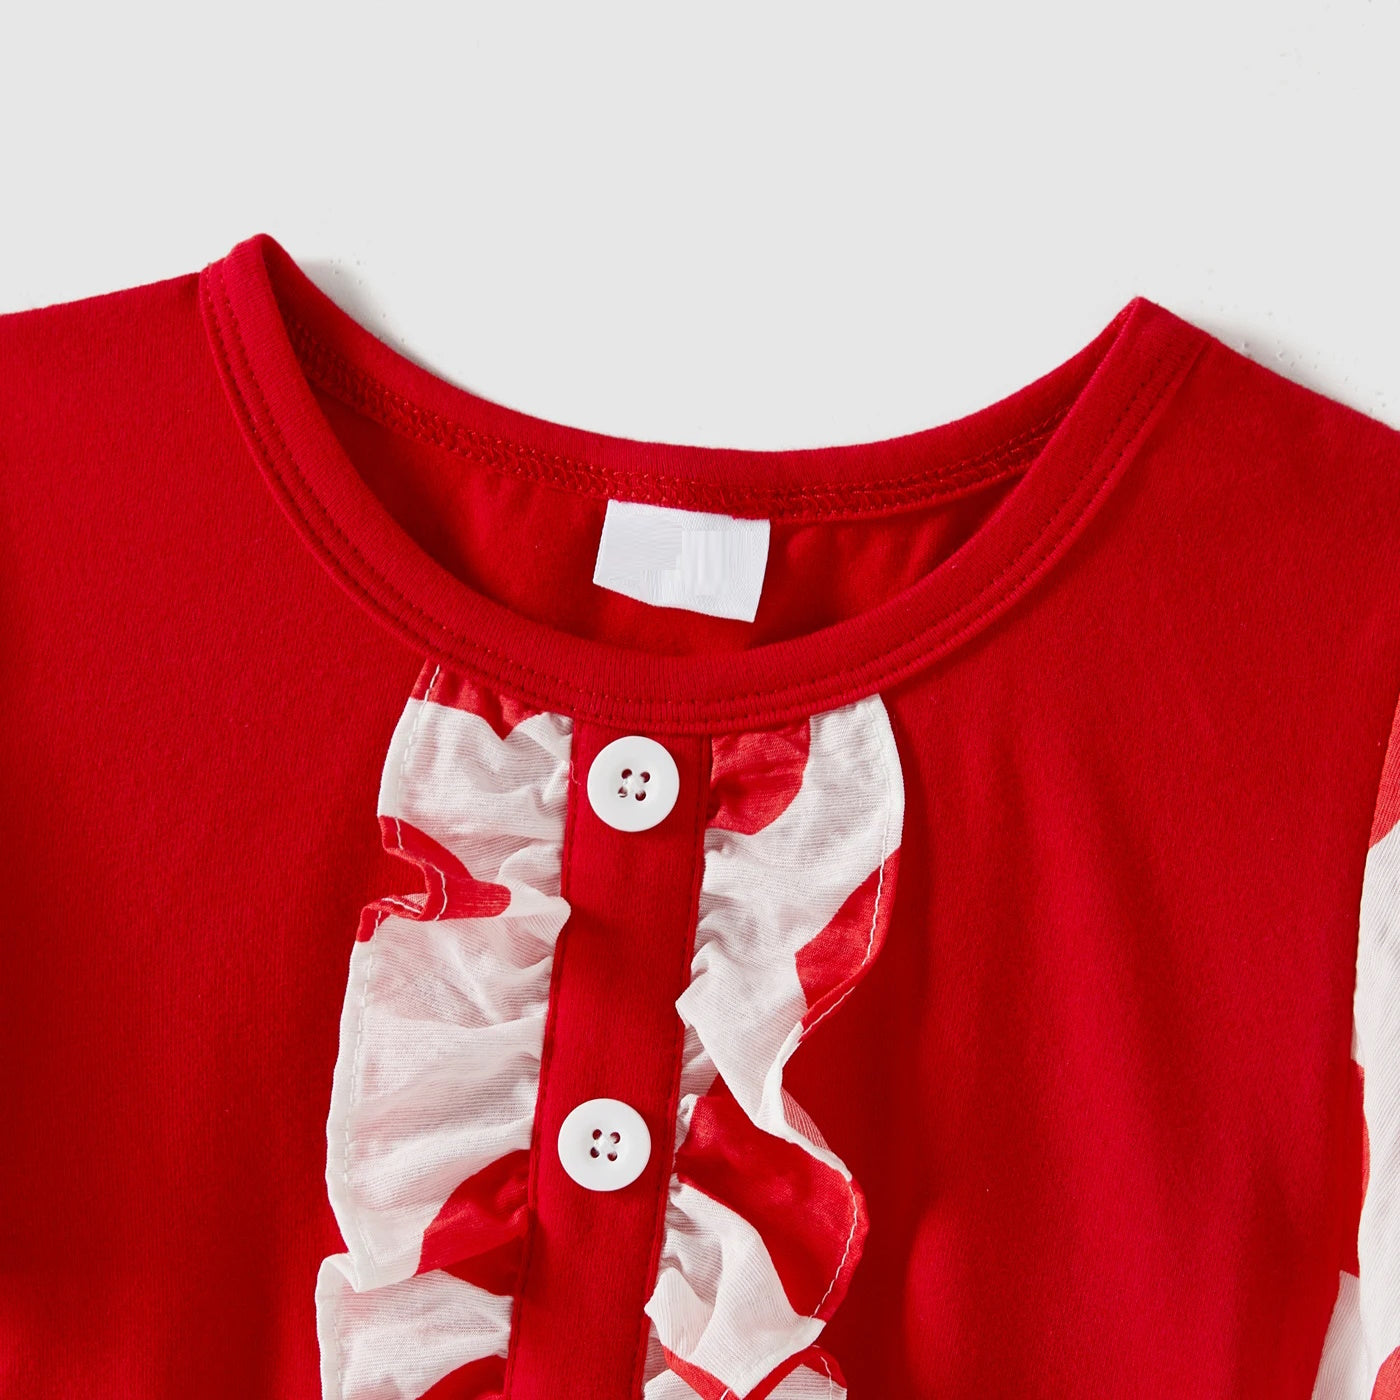 Family Matching Dress Allover Heart Print Dresses - ChildAngle